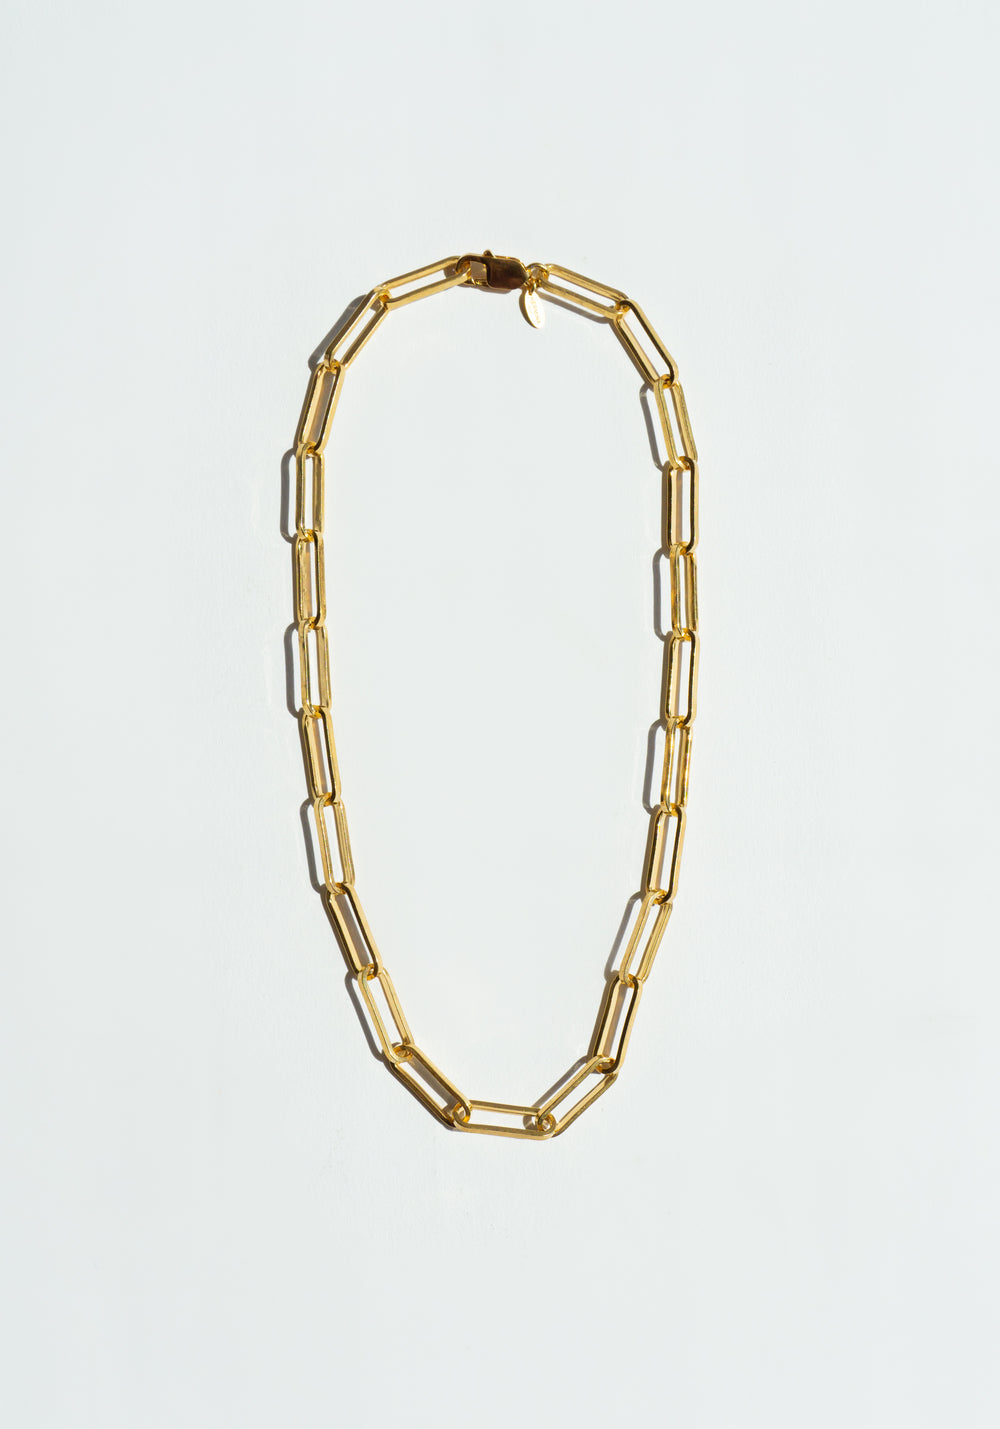 Hermina Athens Zena Chain Necklace